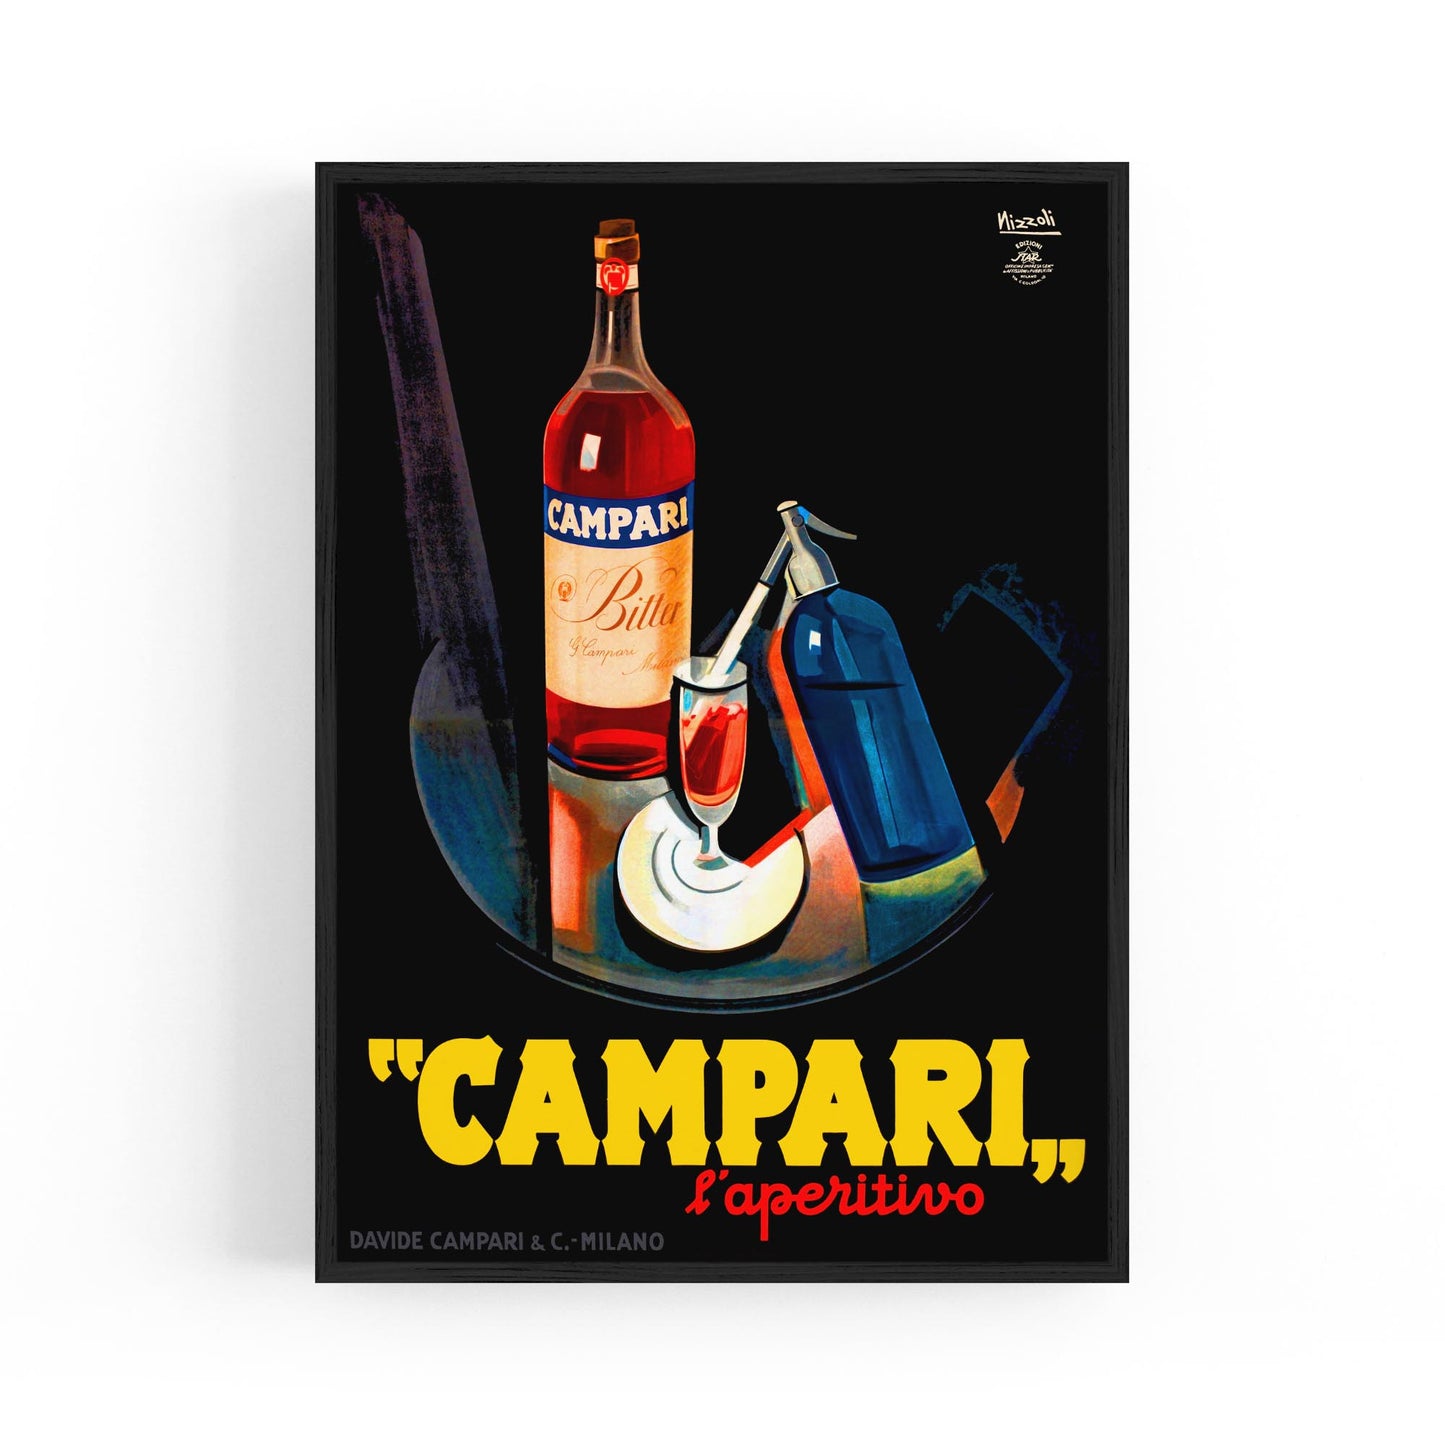 Campari by Marcello Nizzoli | Framed Vintage Poster